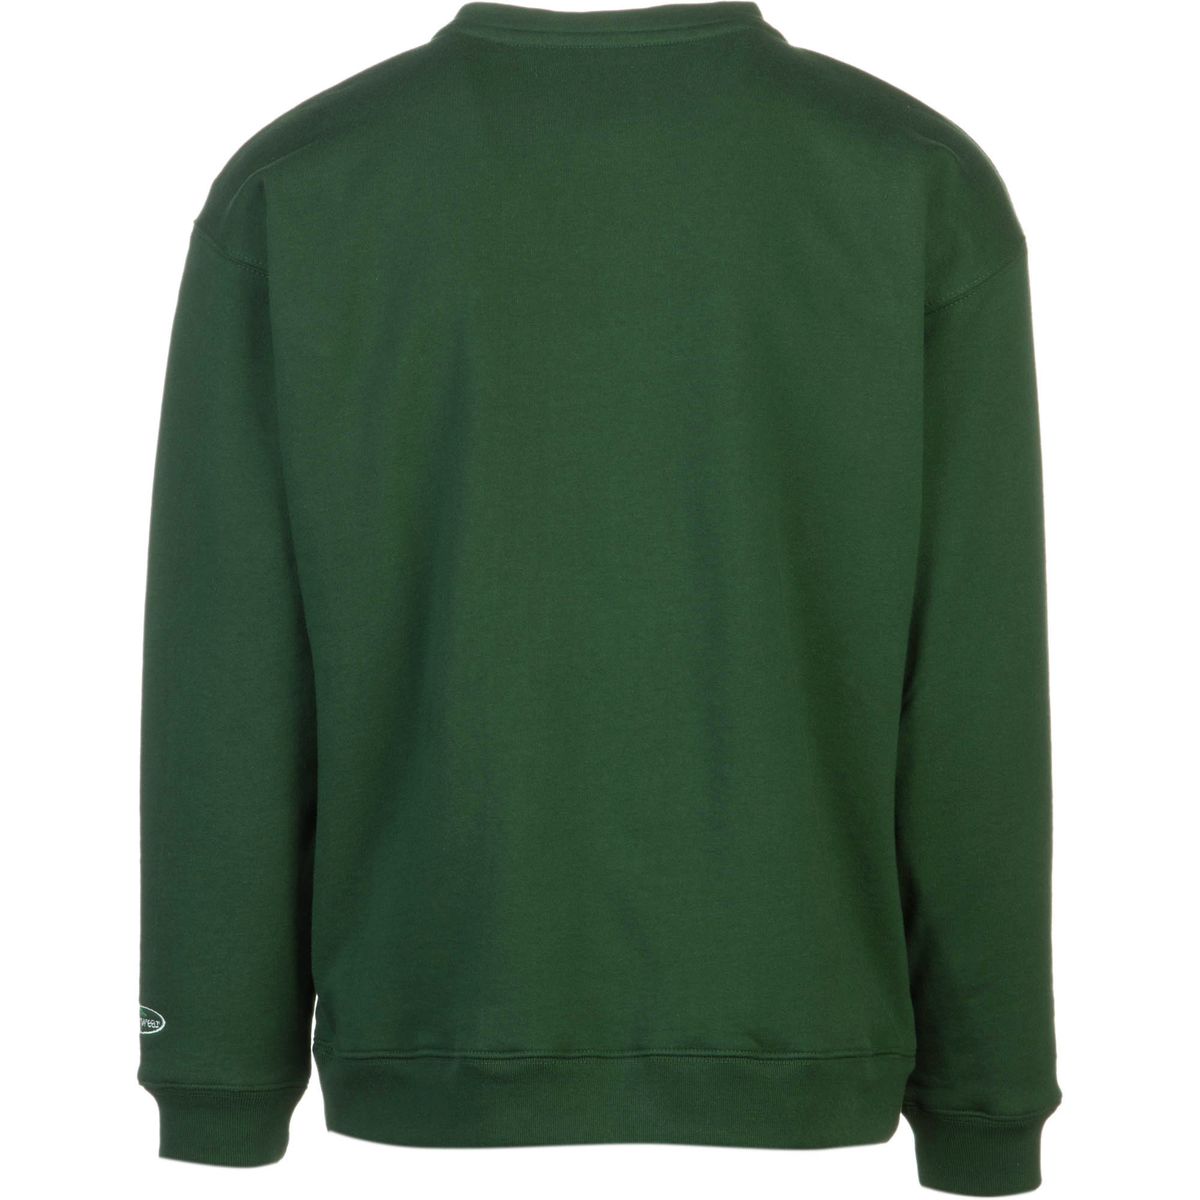 Arborwear Double Thick Crew Sweatshirt - Men's | eBay